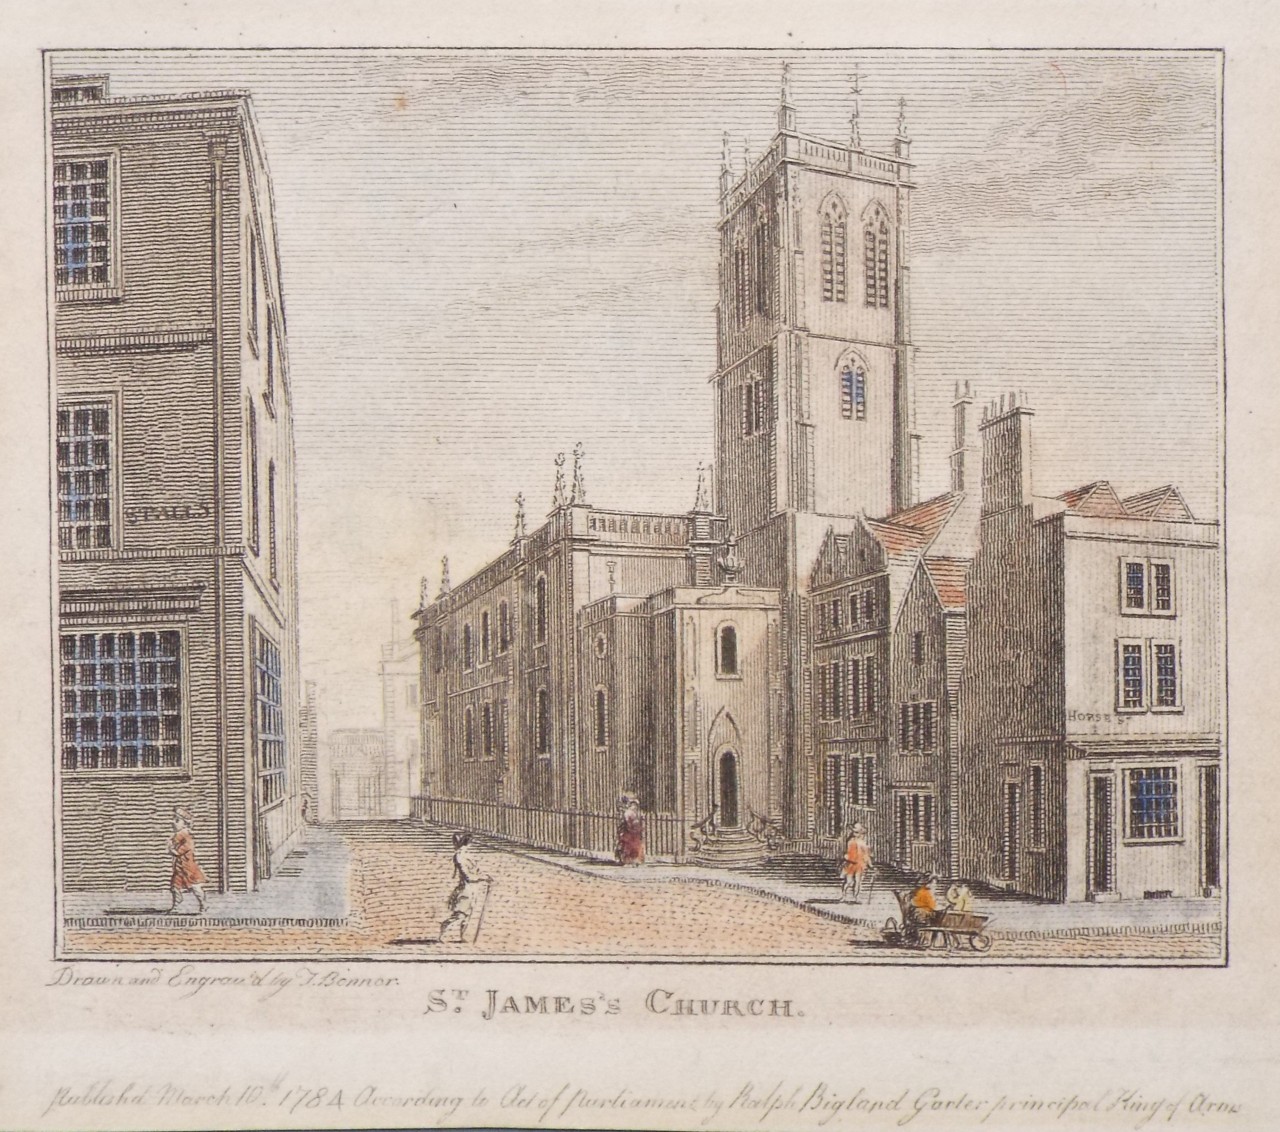 Print - St. James's Church - Bonnor